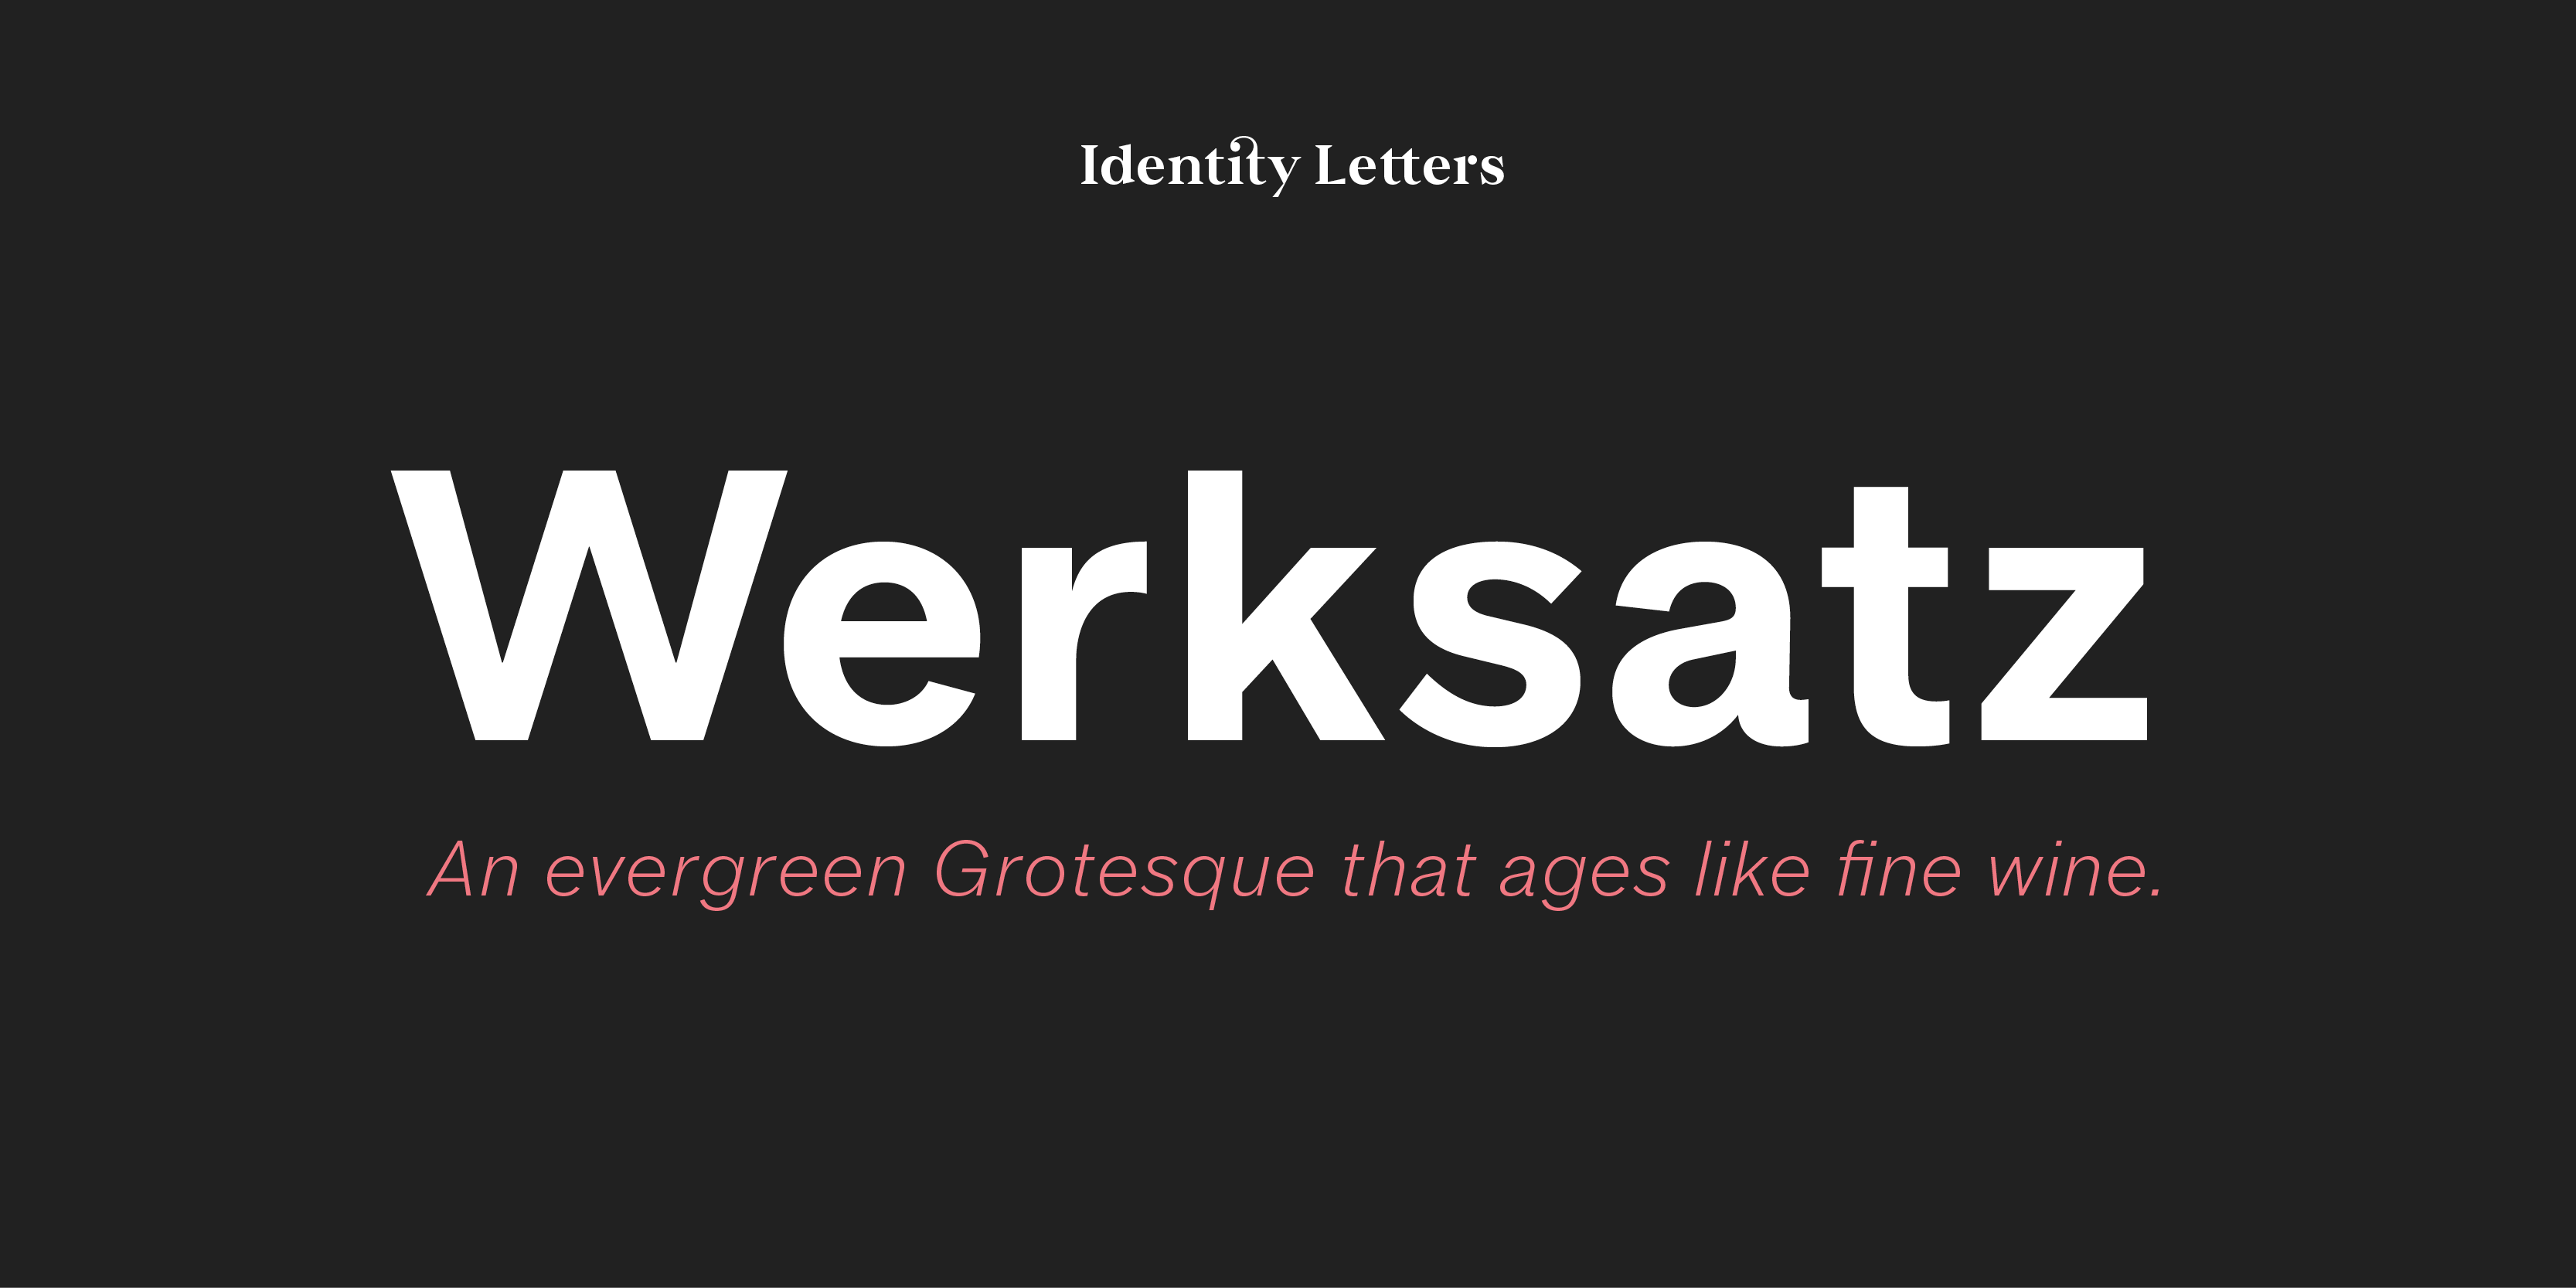 Werksatz – By Identity Letters